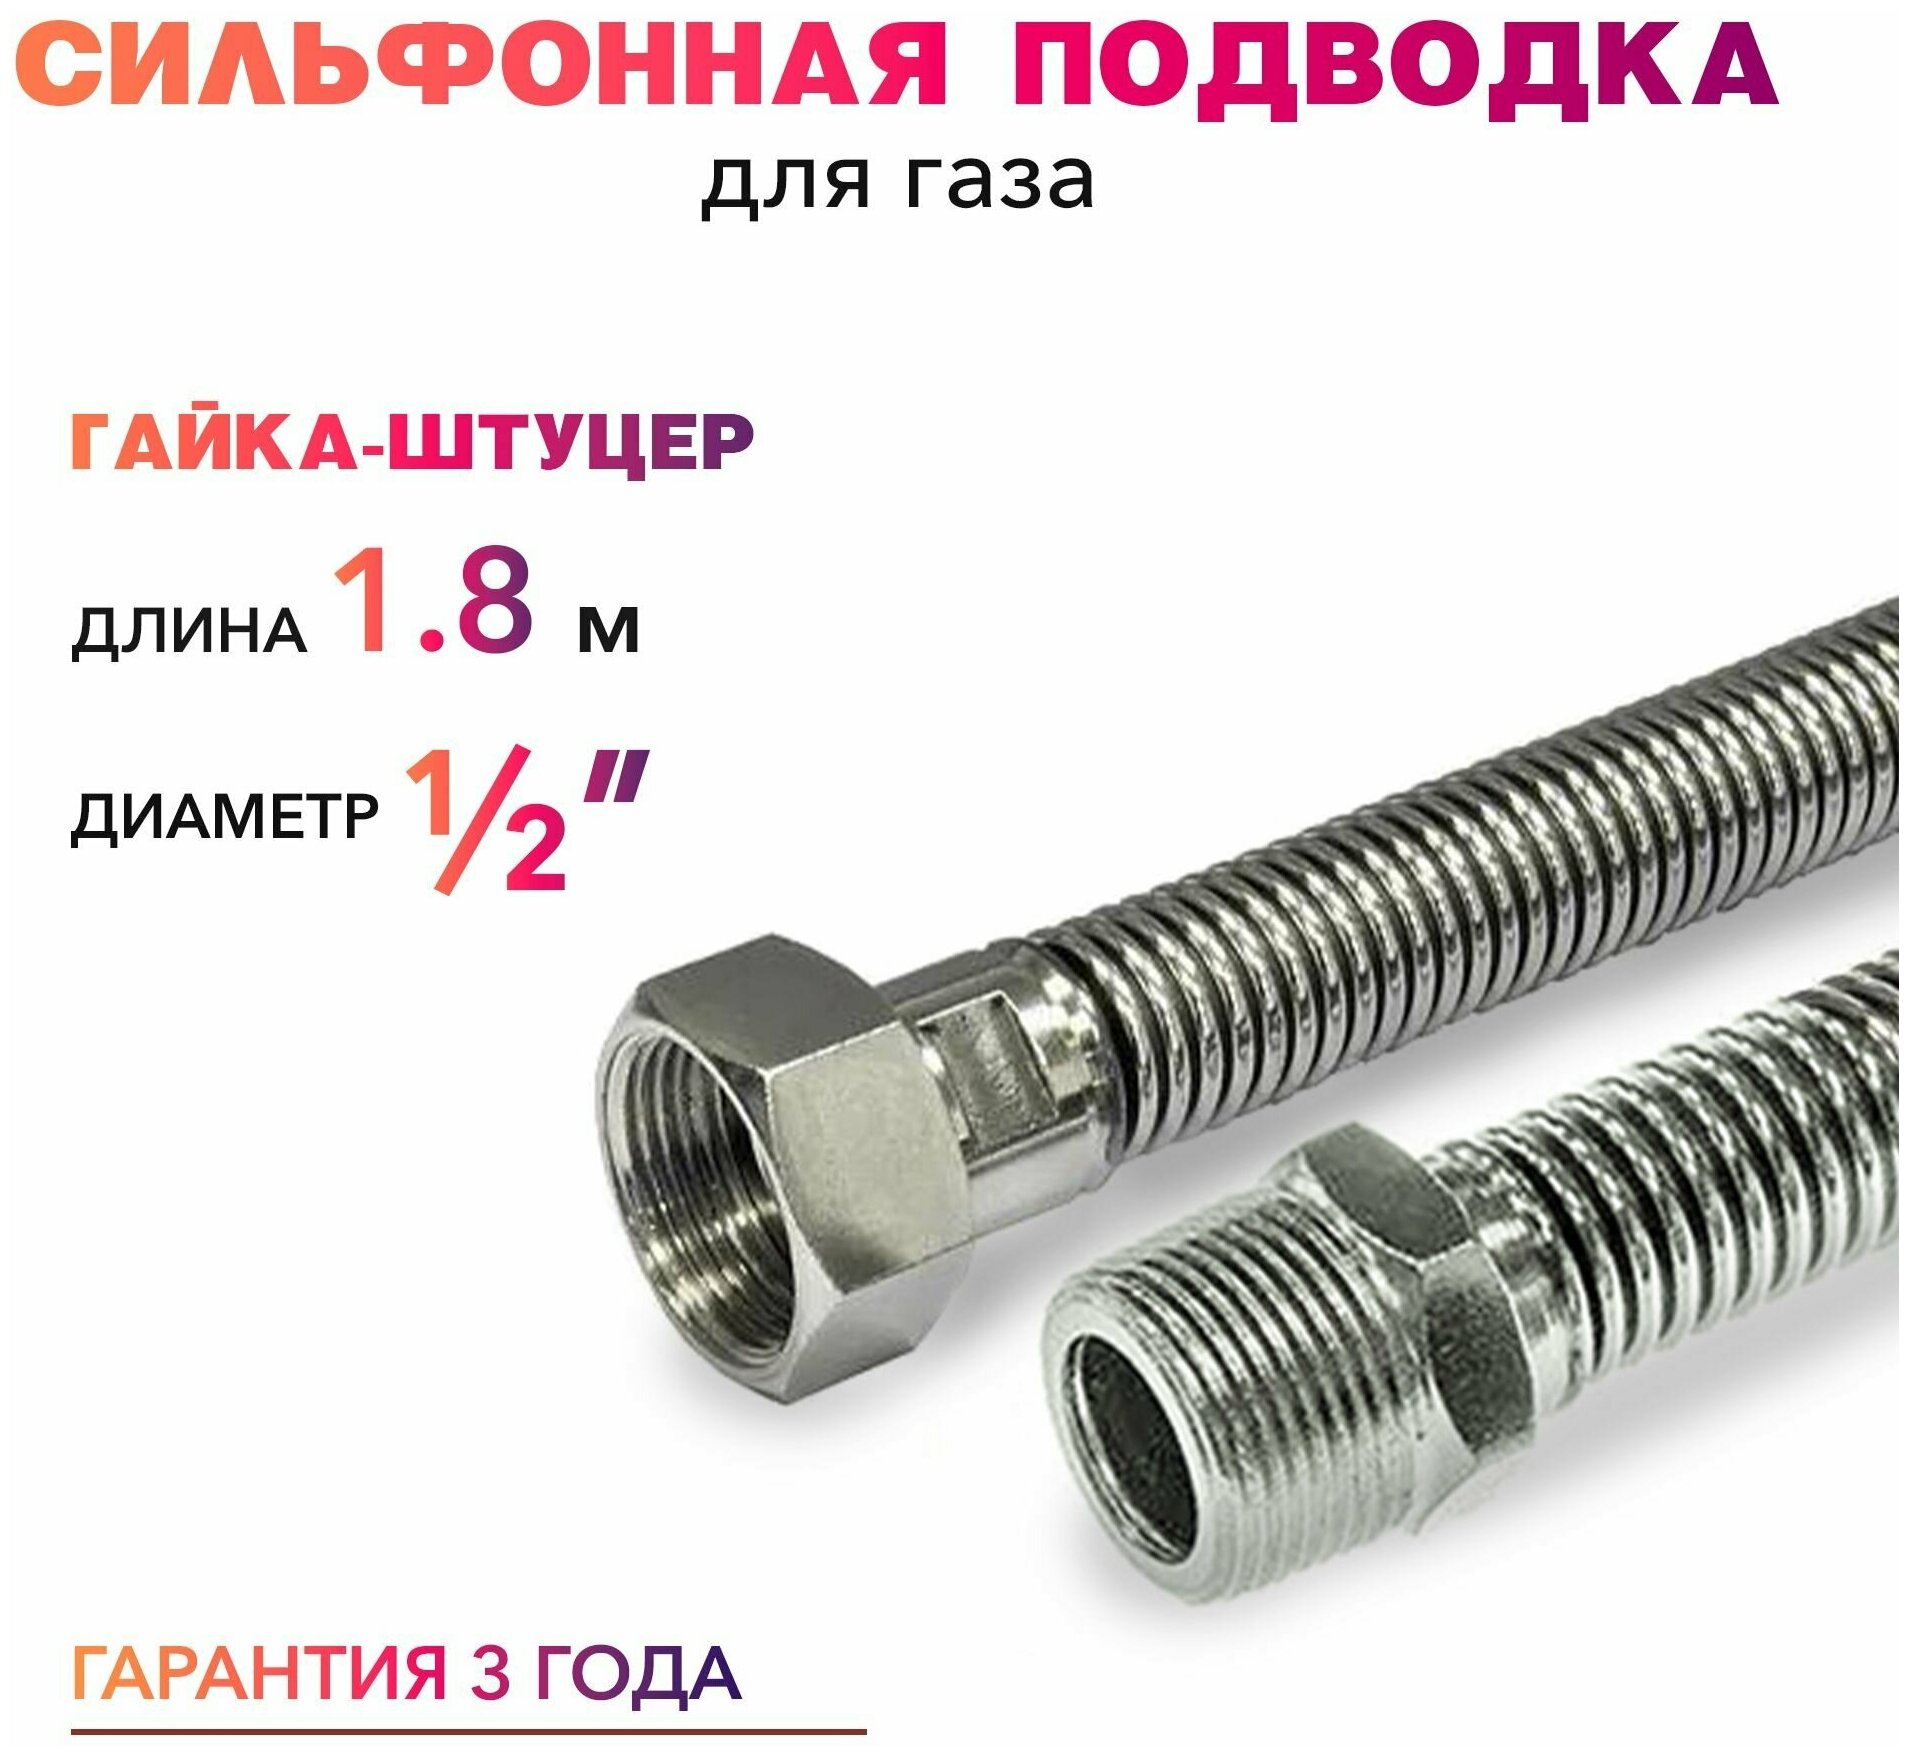 Шланг Подводка для газа сильфонного типа 1/2" гайка-штуцер MK Plast